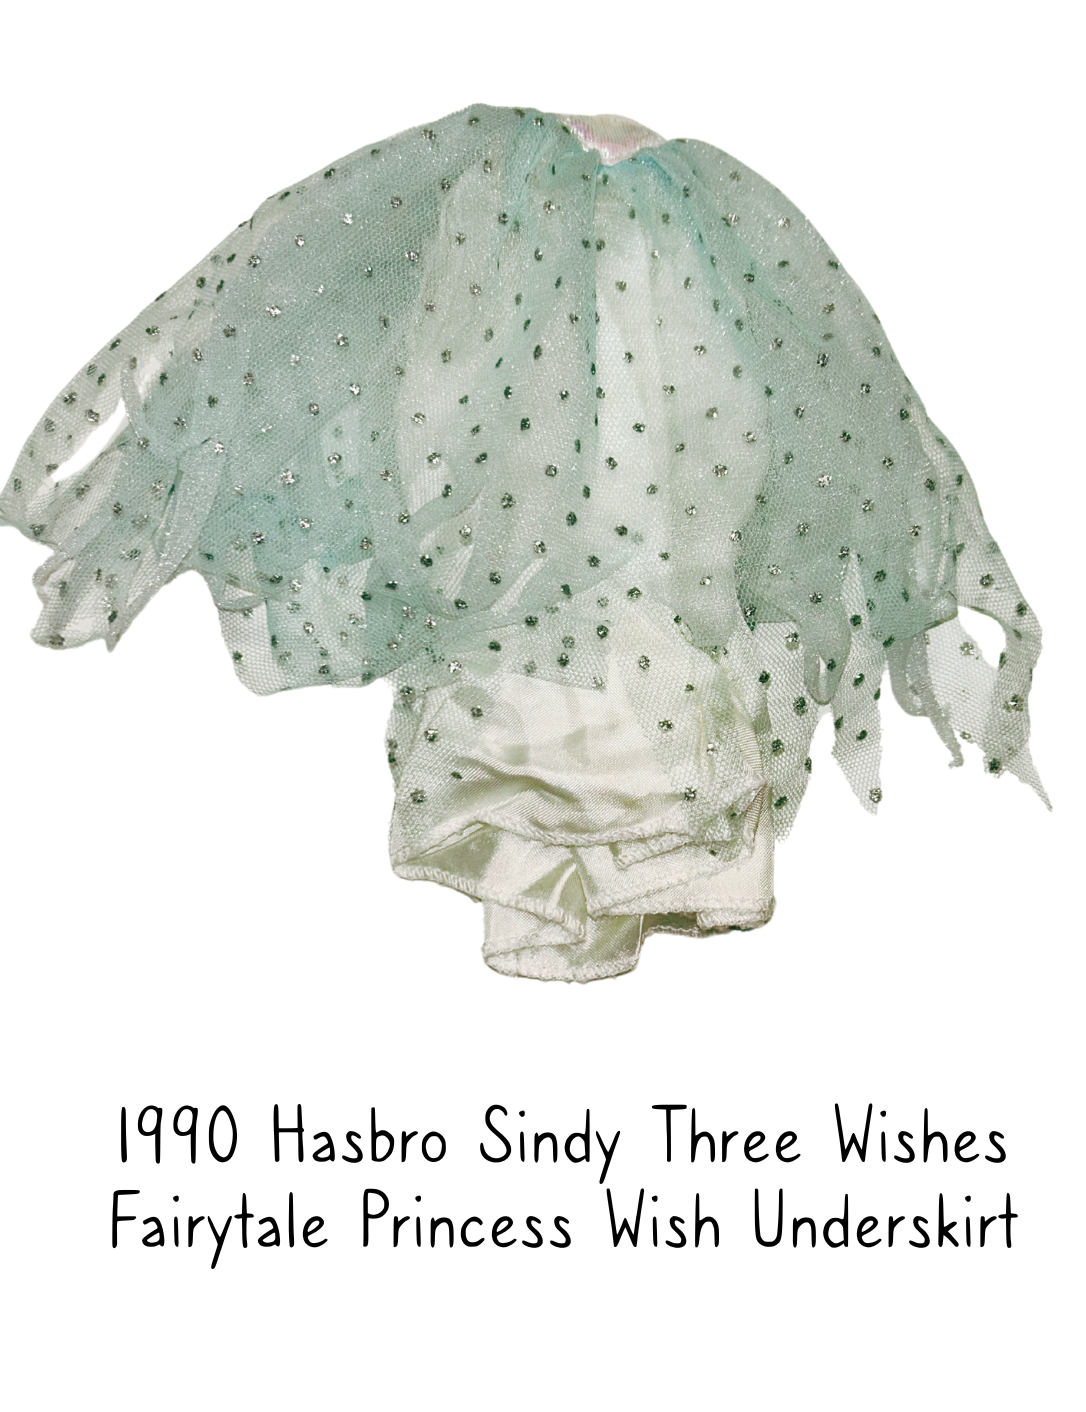 1990 Hasbro Sindy Three Wishes Fairytale Princess Wish Underskirt